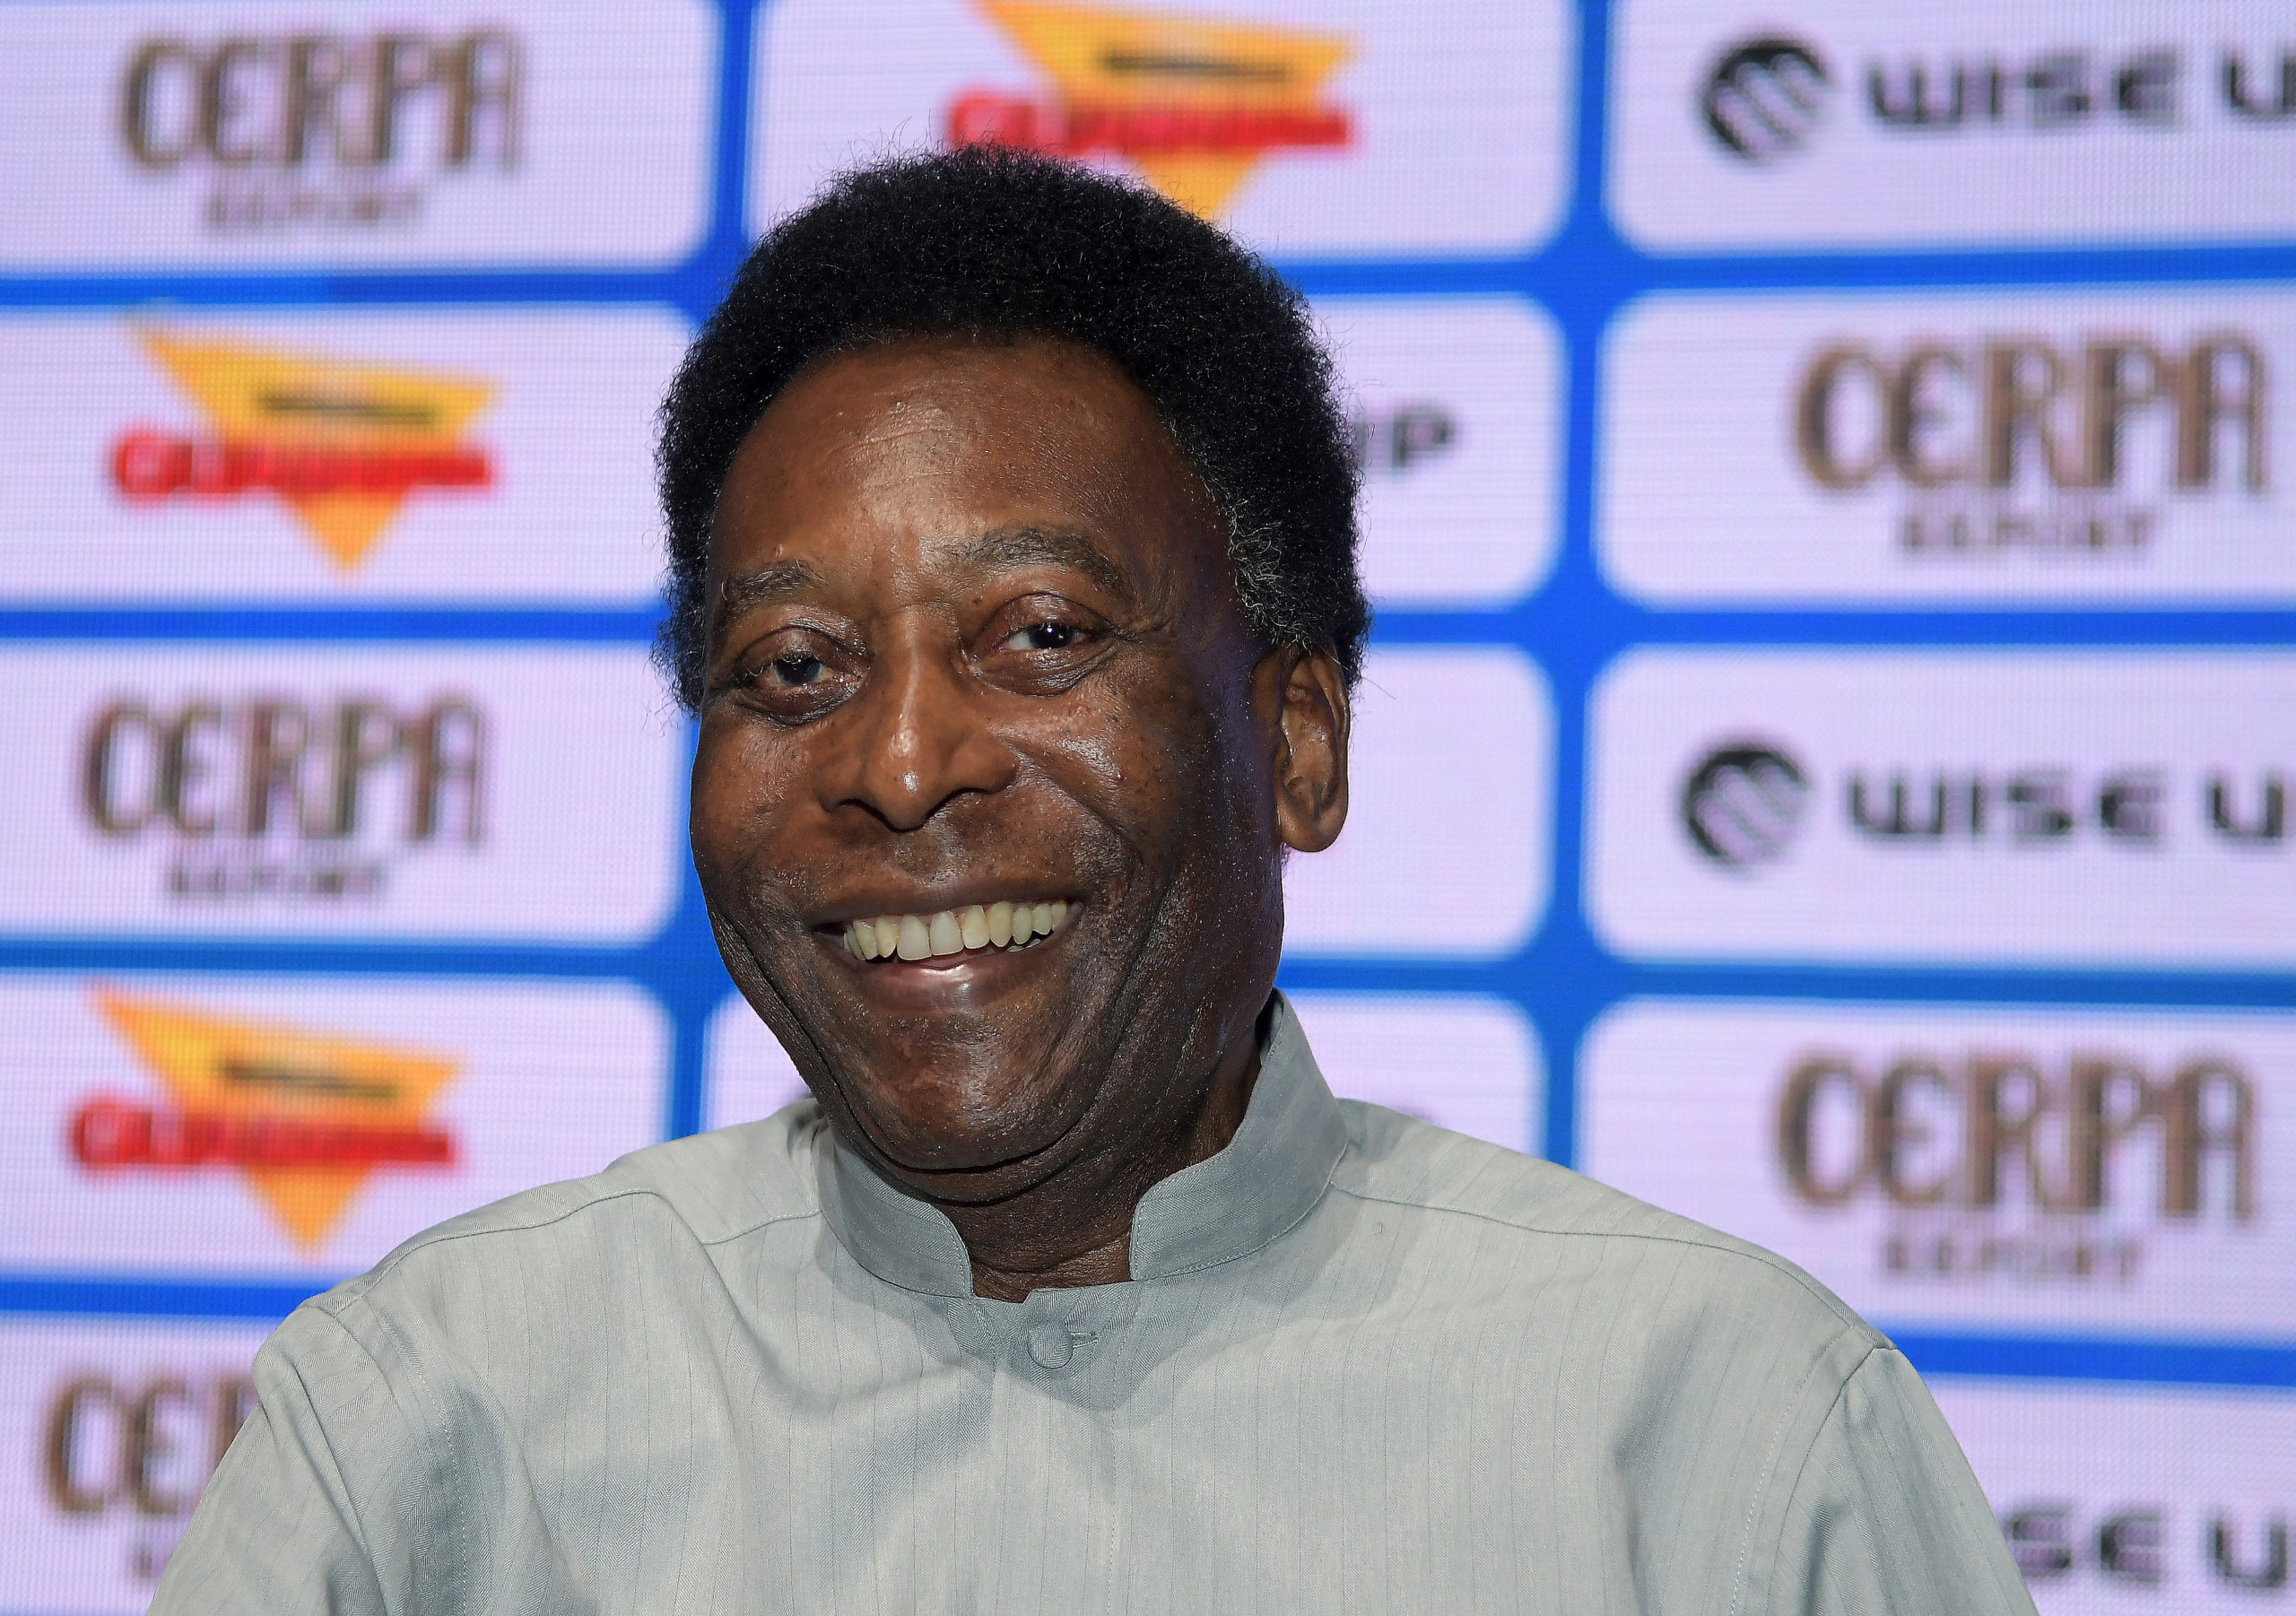 Soccer Legend Pelé, 82, Continues to Tragically Battle Cancer